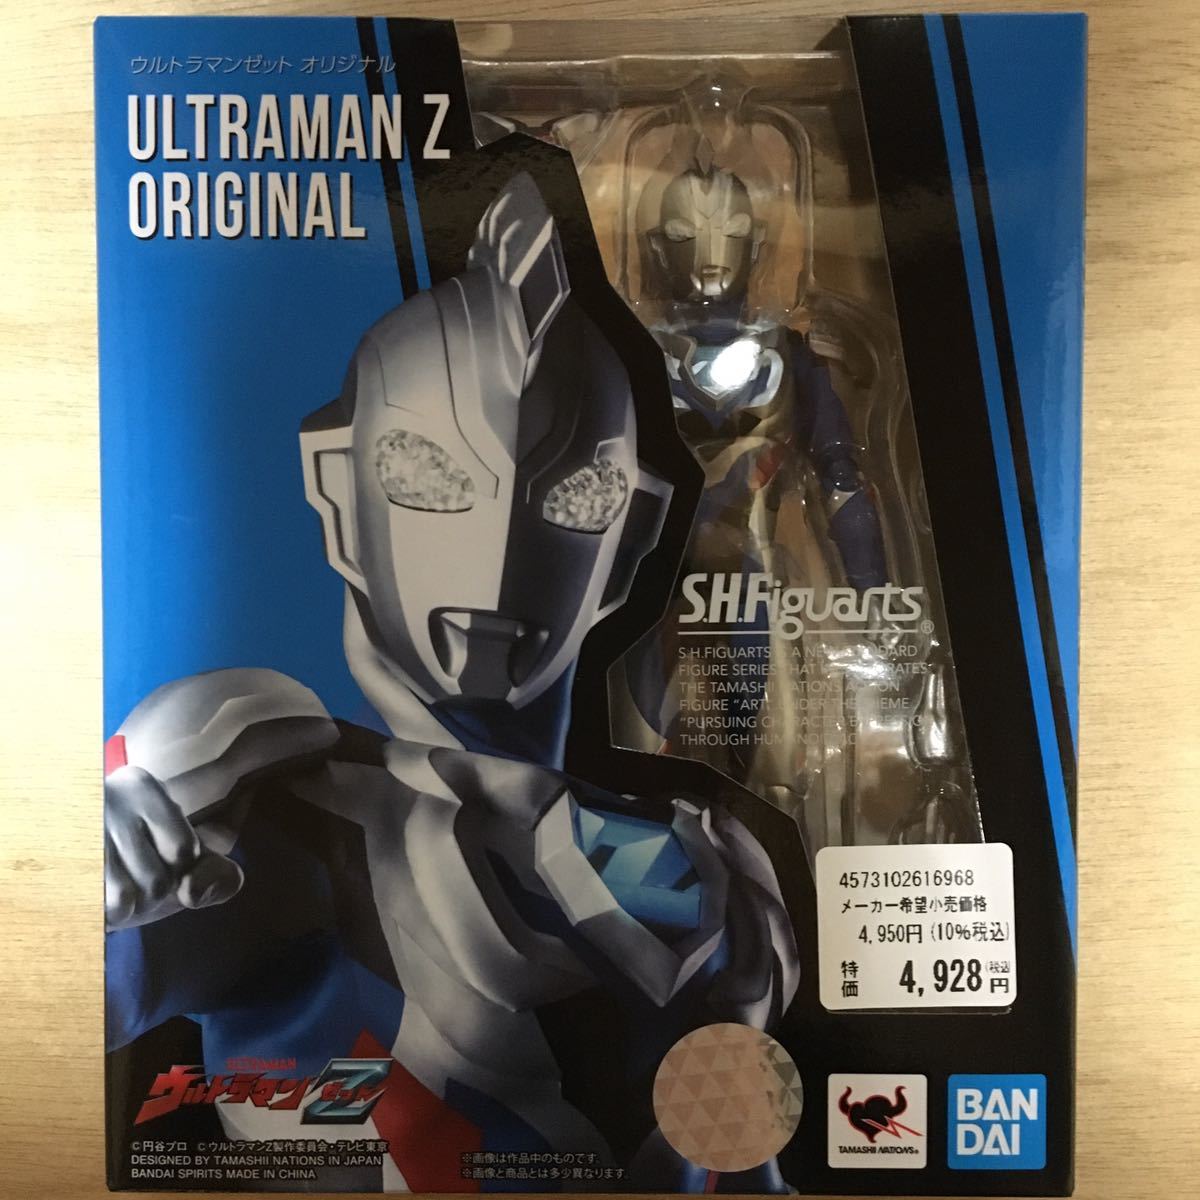  новый товар стандартный товар S.H.Figuarts Ultraman Z оригинал figuarts фигурка Ultraman Z Ultraman Z Z